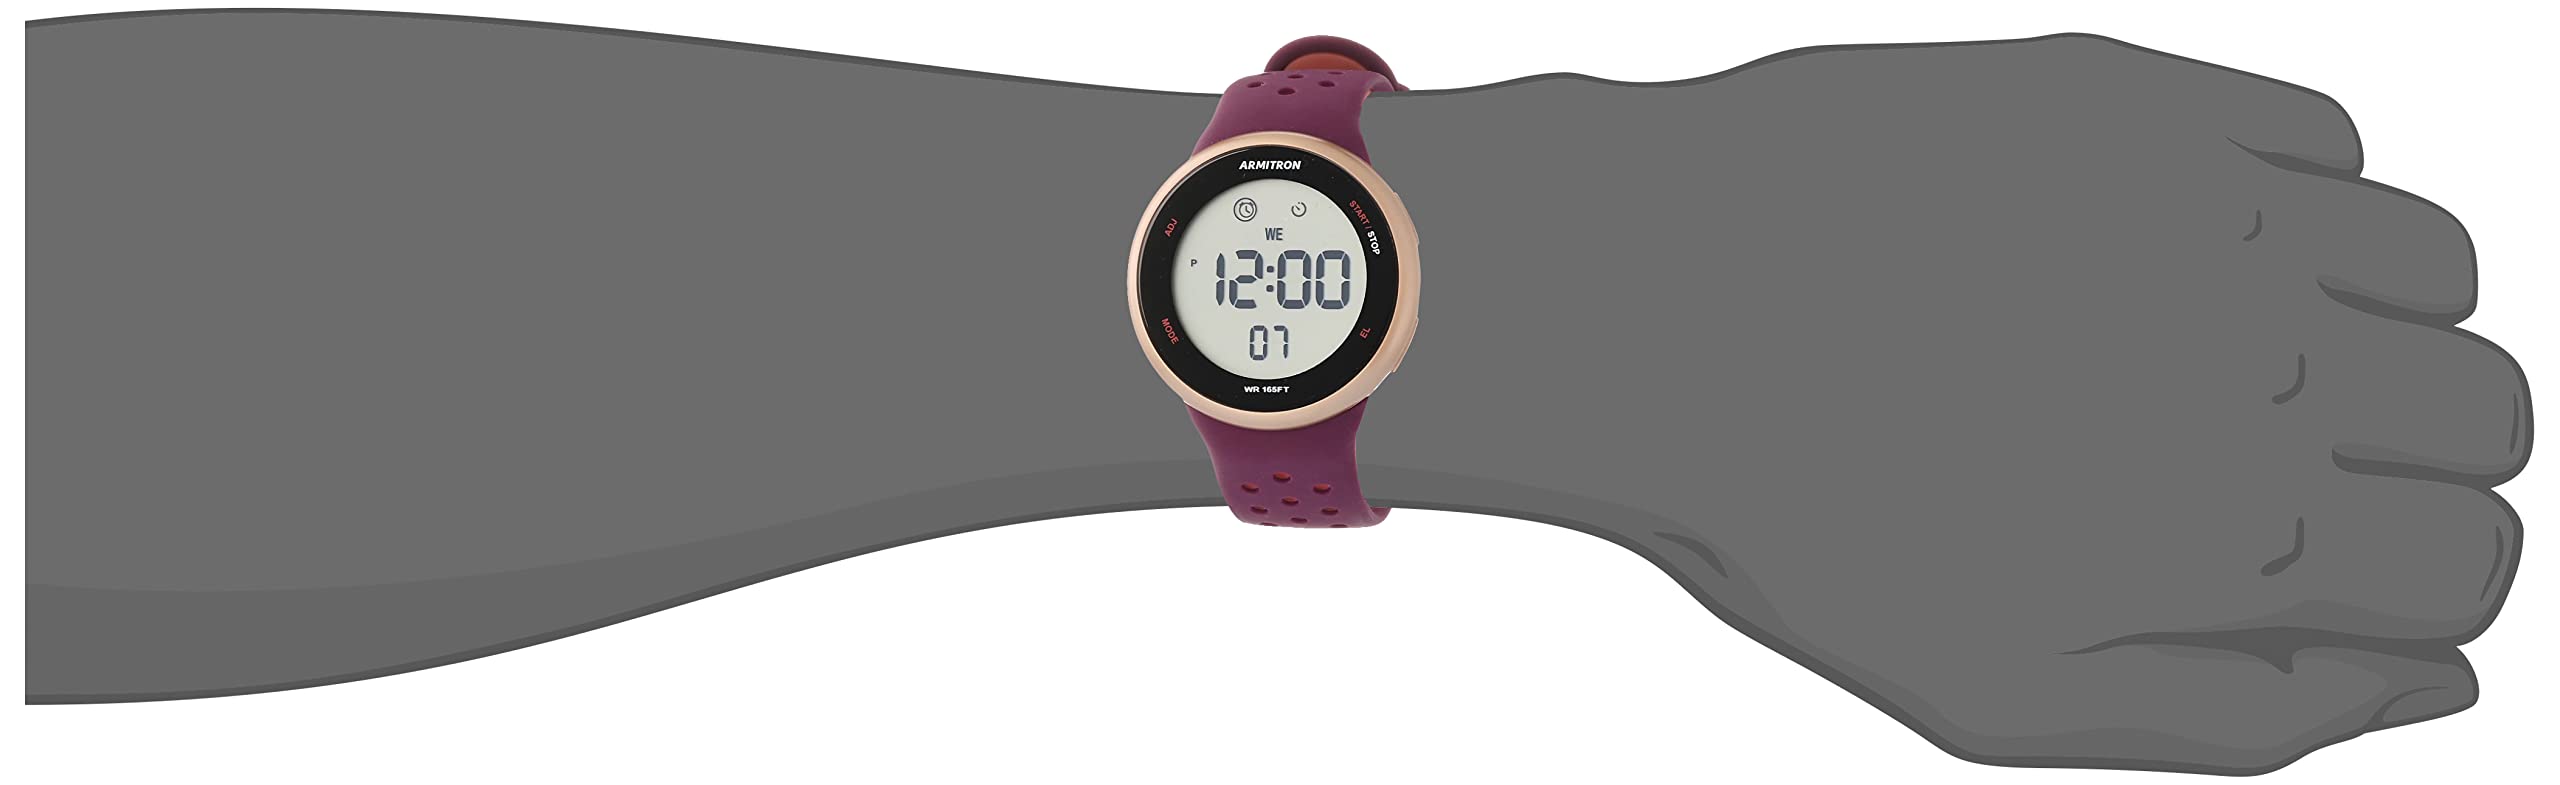 Armitron Sport Unisex Digital Chronograph Silicone Strap Watch, 40/8423